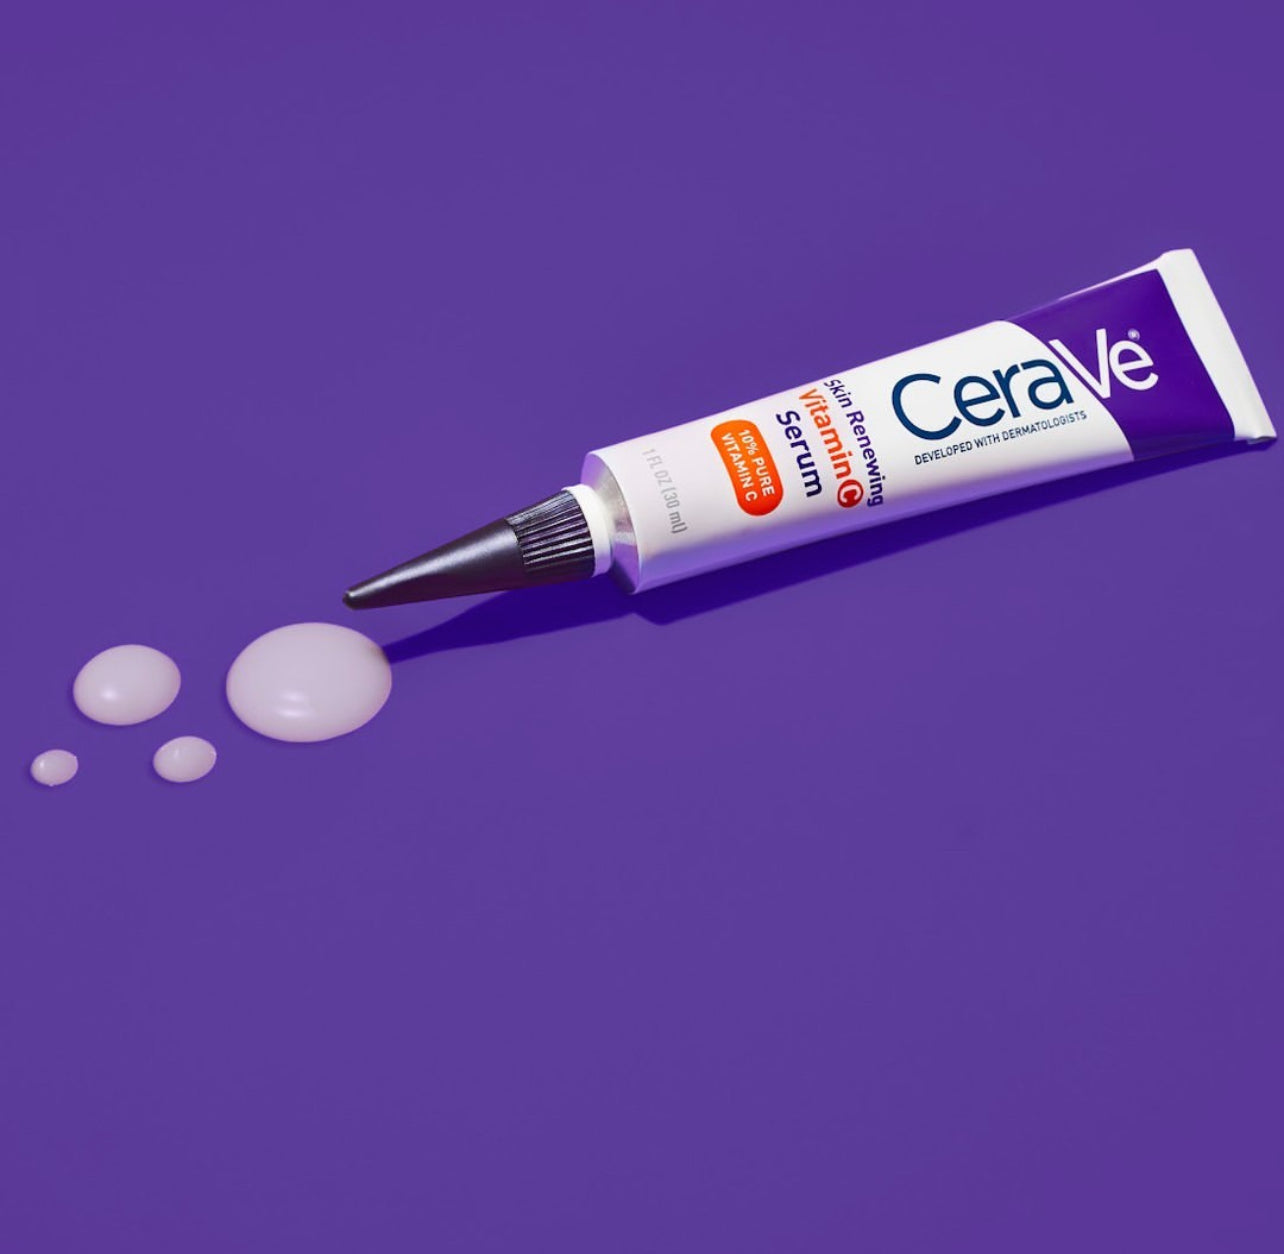 CeraVe Skin Renewing Vitamin C Serum WITH 10% PURE VITAMIN C